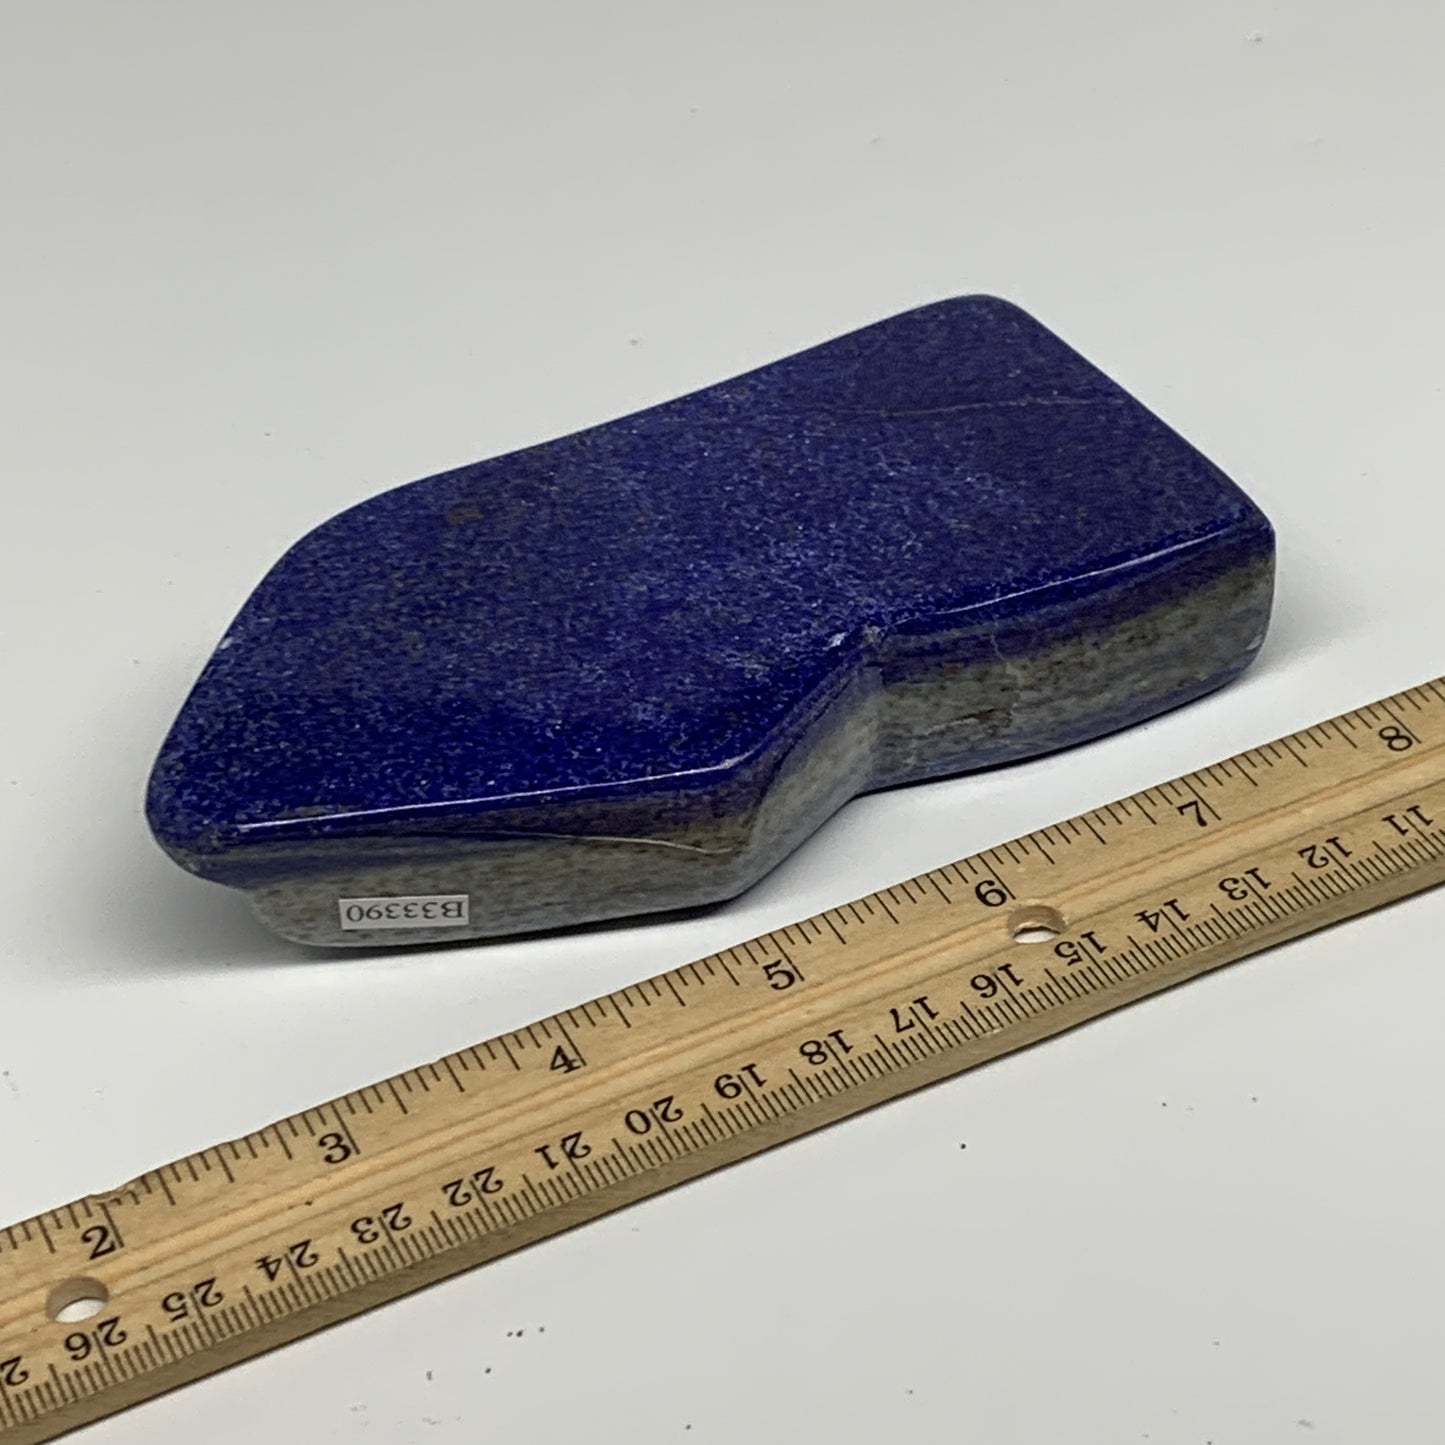 1.03 lbs, 5"x1.6"x1", Natural Freeform Lapis Lazuli from Afghanistan, B33390